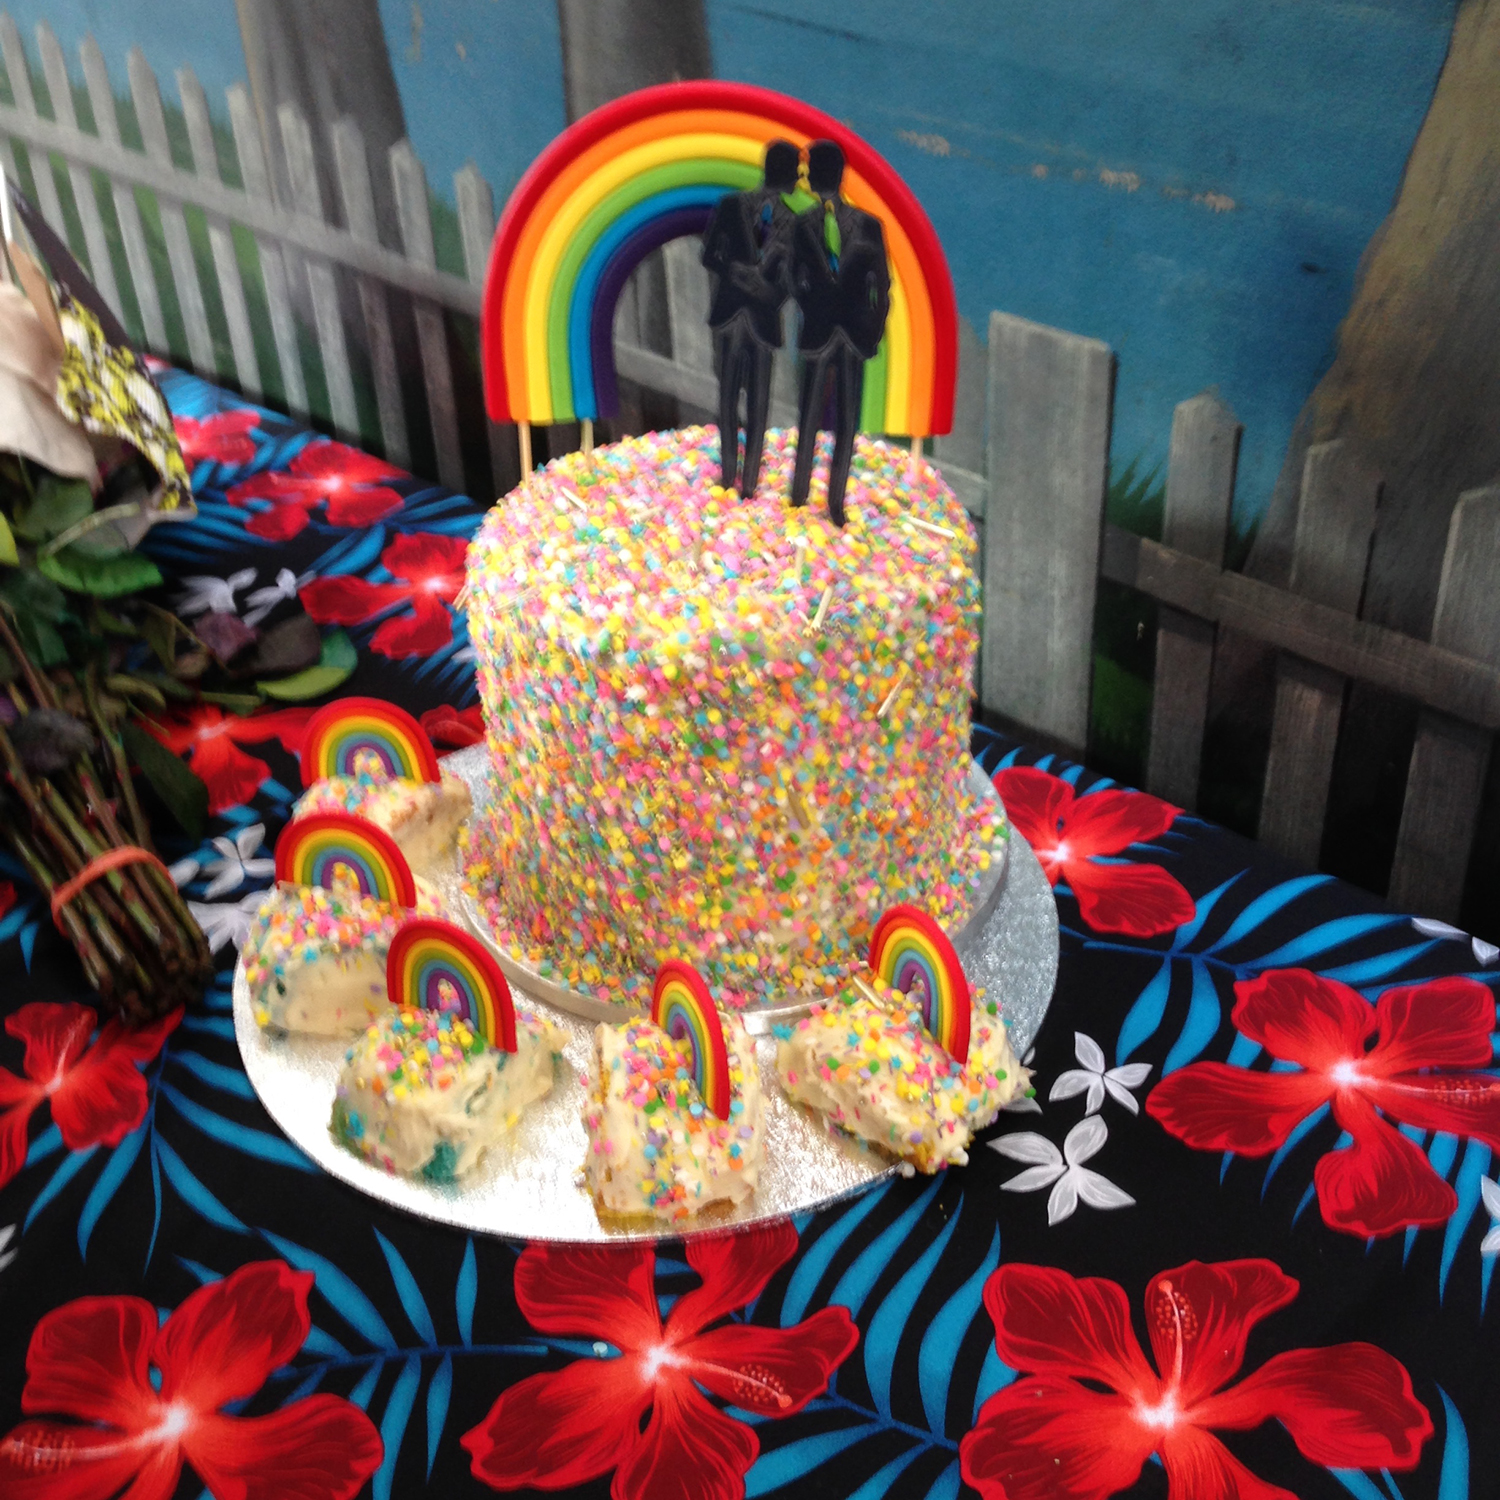 rainbow wedding cake.jpg